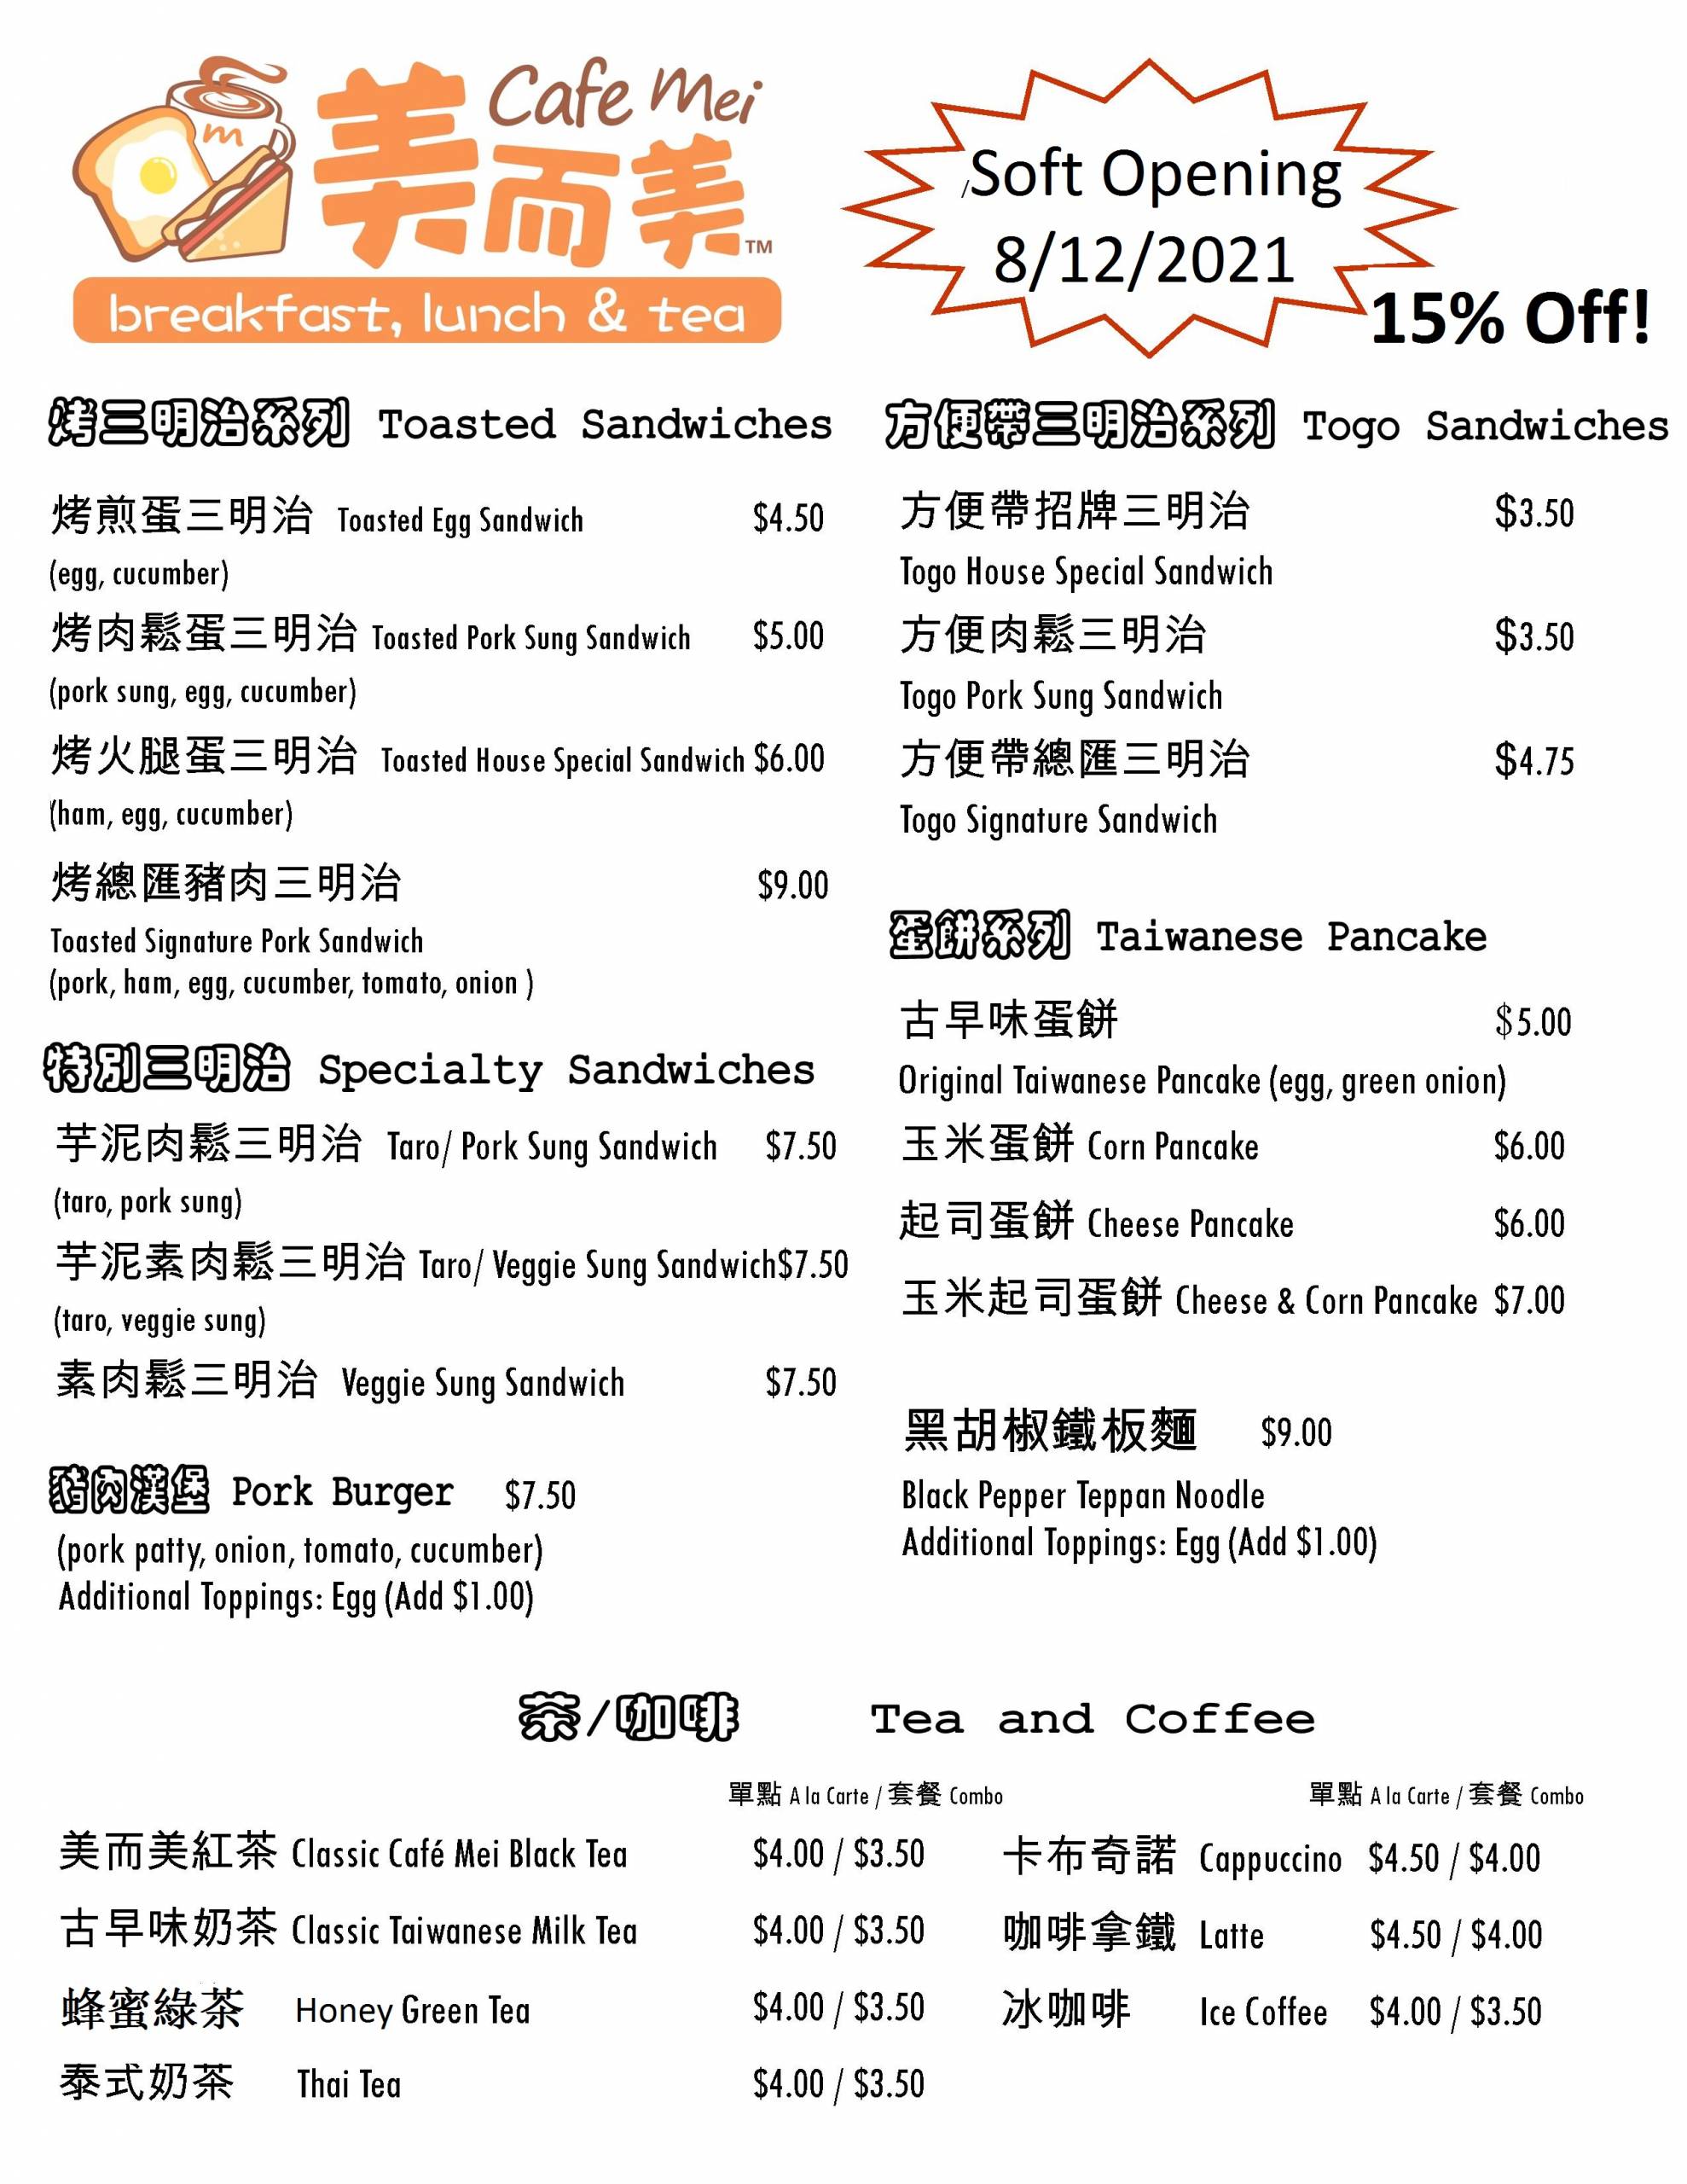 Cafe Mei opening menu